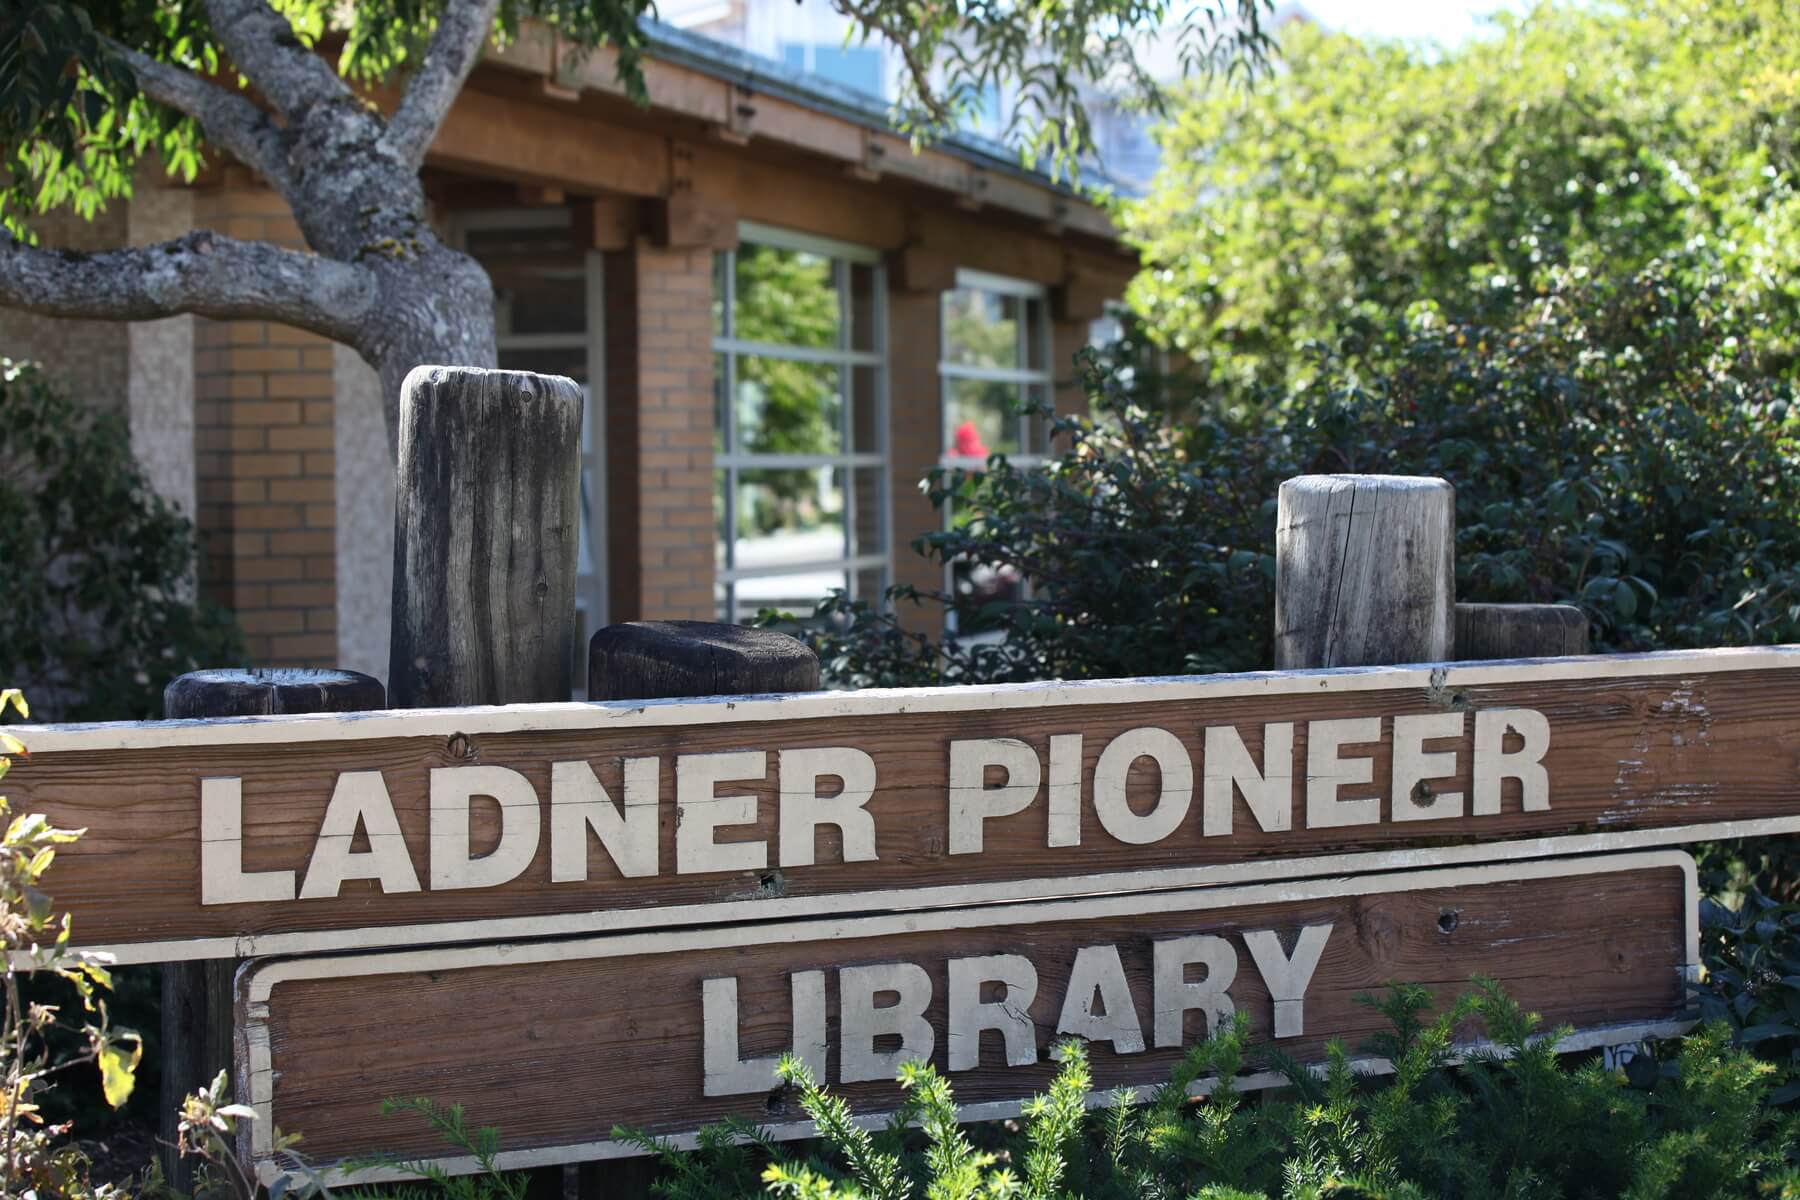 Ladner Pioneer Library